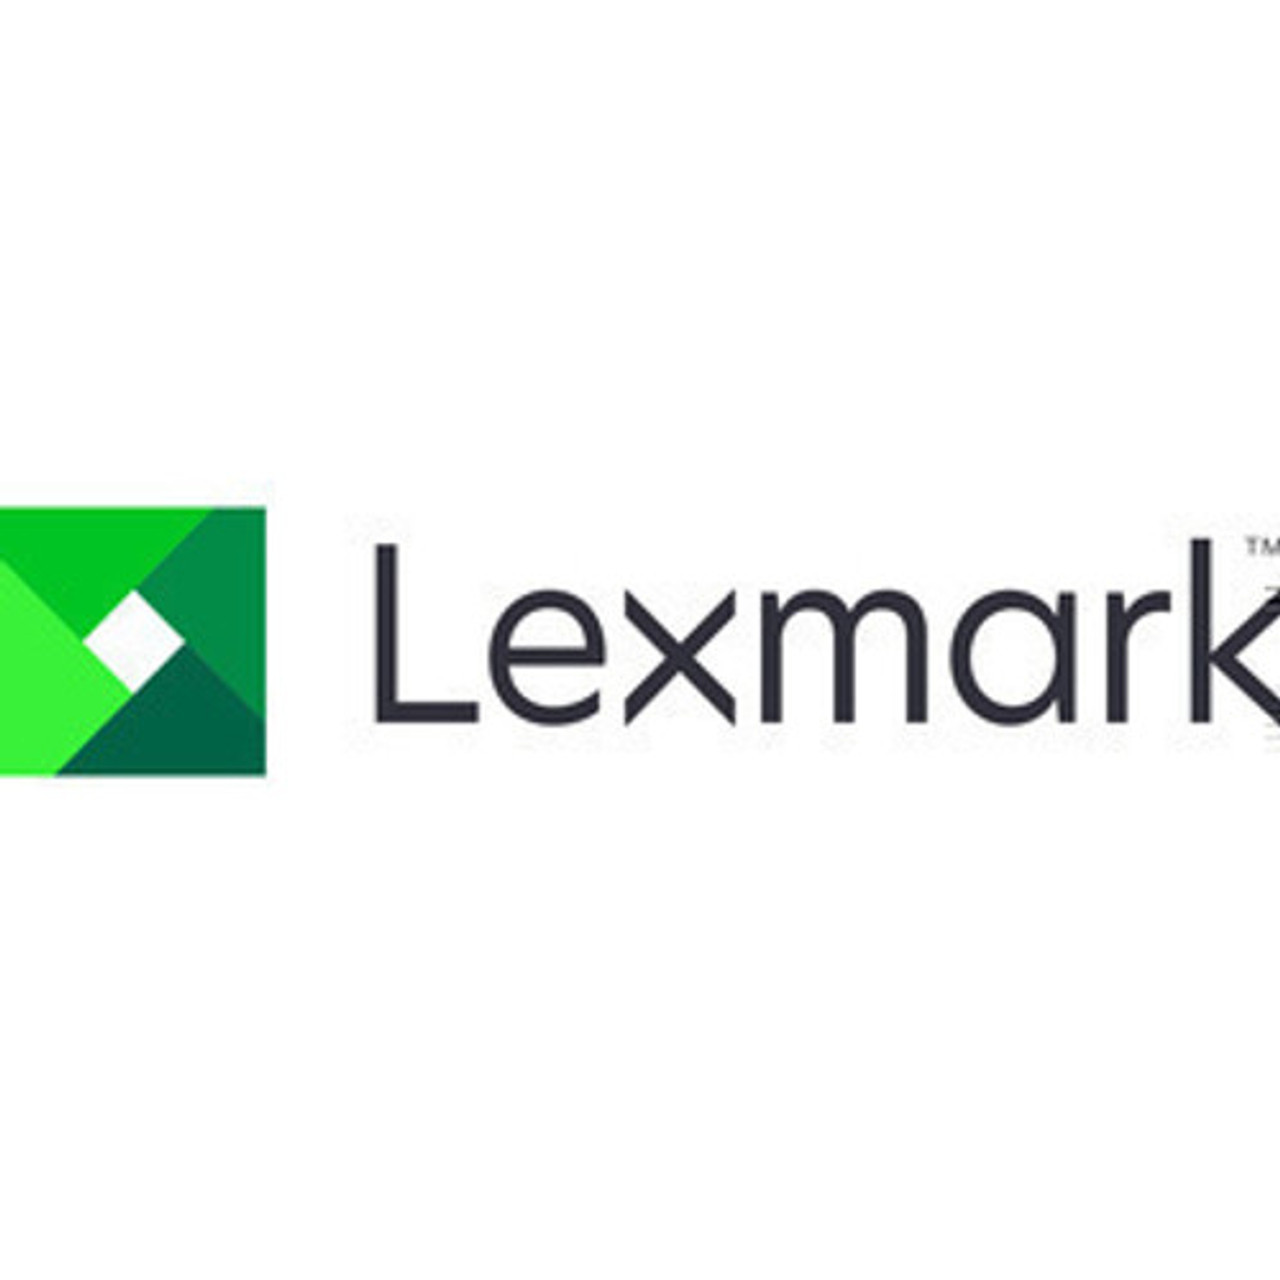 Lexmark - Flatbed scanner CCDM - 41X1899